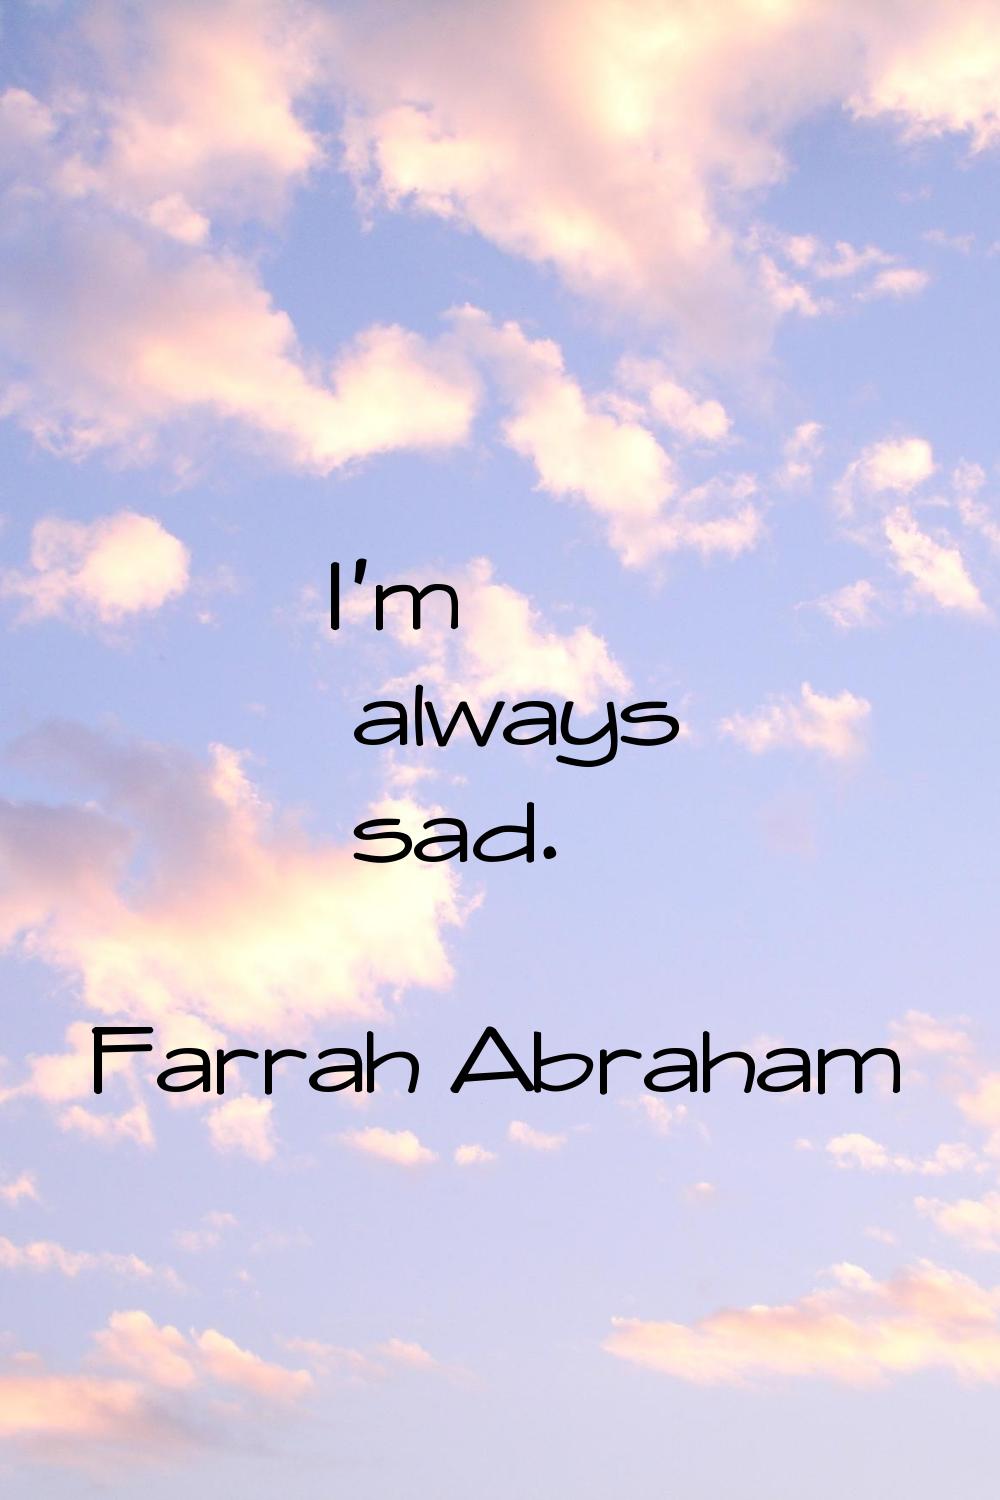 I'm always sad.